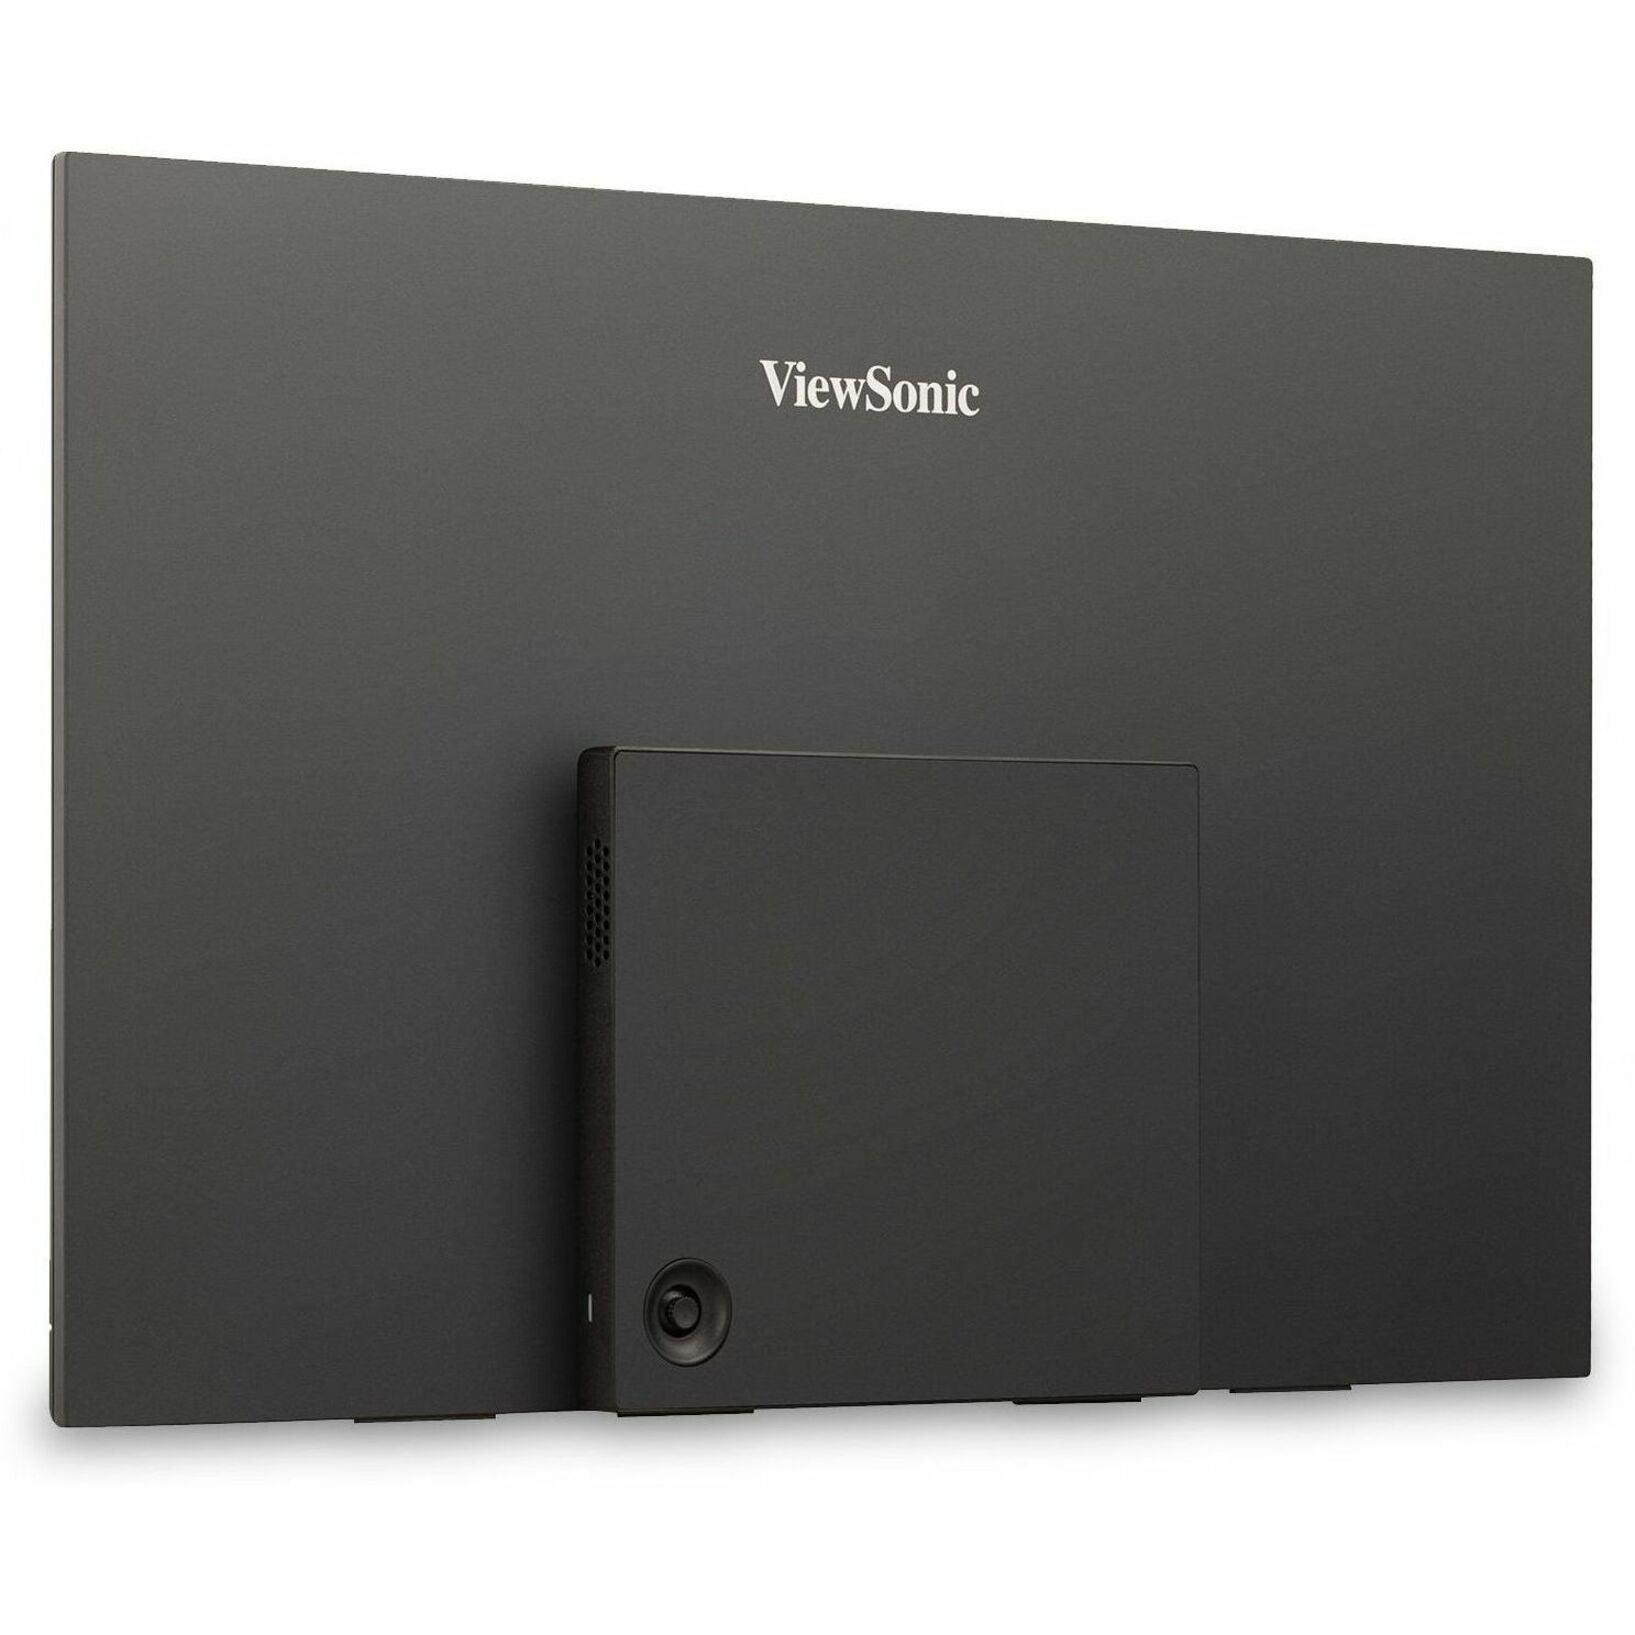 ViewSonic VX1655-4K Gaming LED Monitor, 15.6" 4K UHD Portable Monitor with 60W USB C and mini HDMI